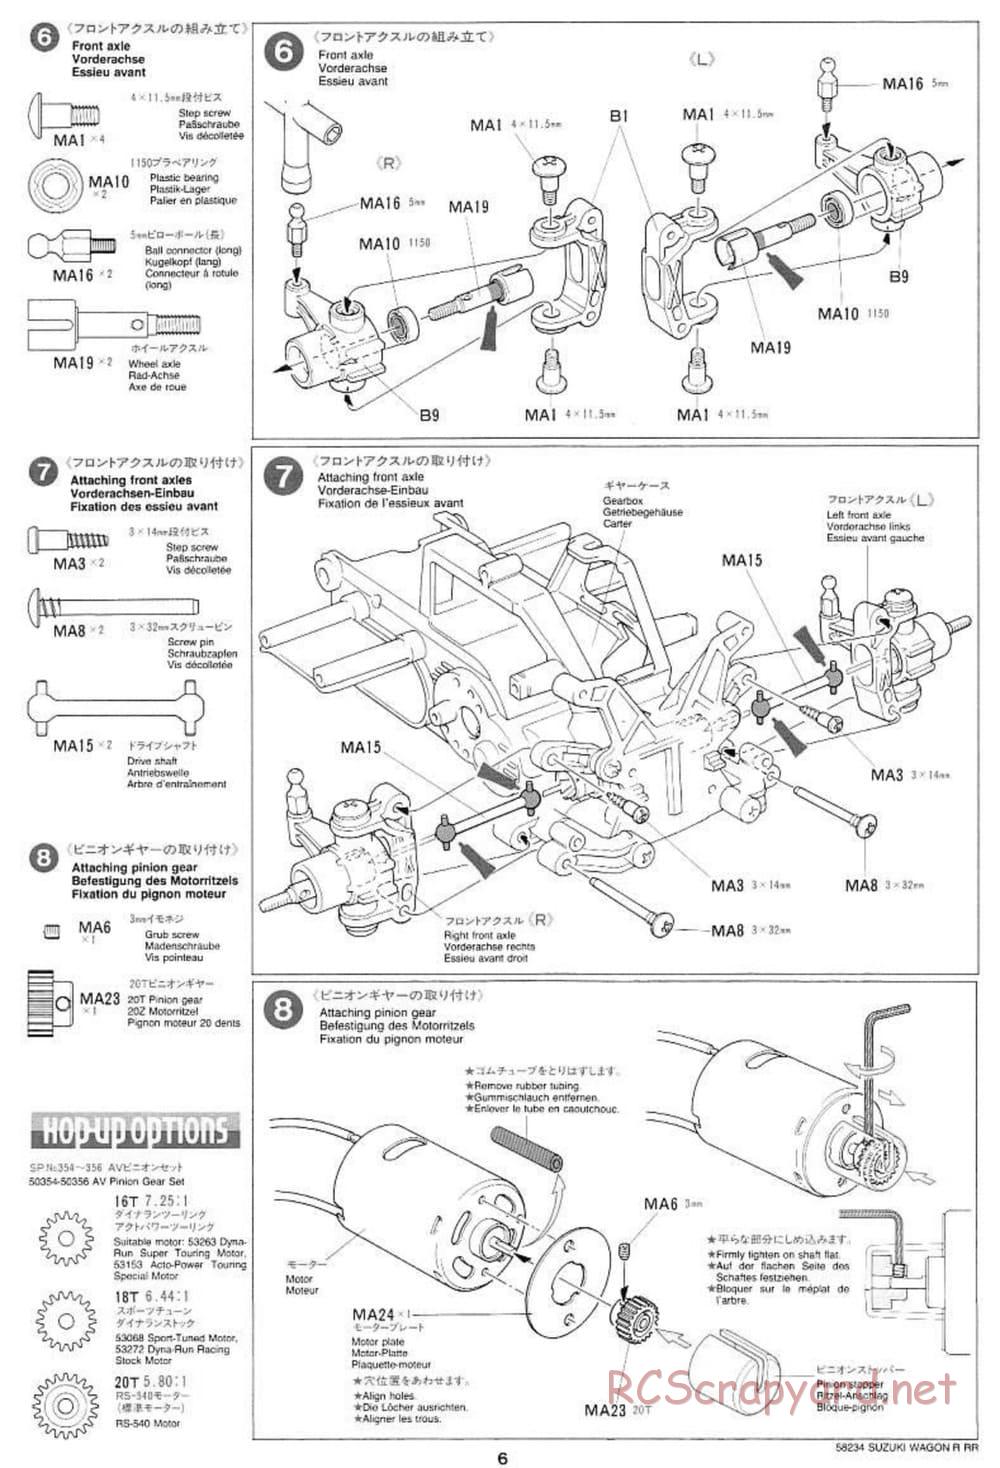 Tamiya - Suzuki WagonR-RR - M03 Chassis - Manual - Page 6